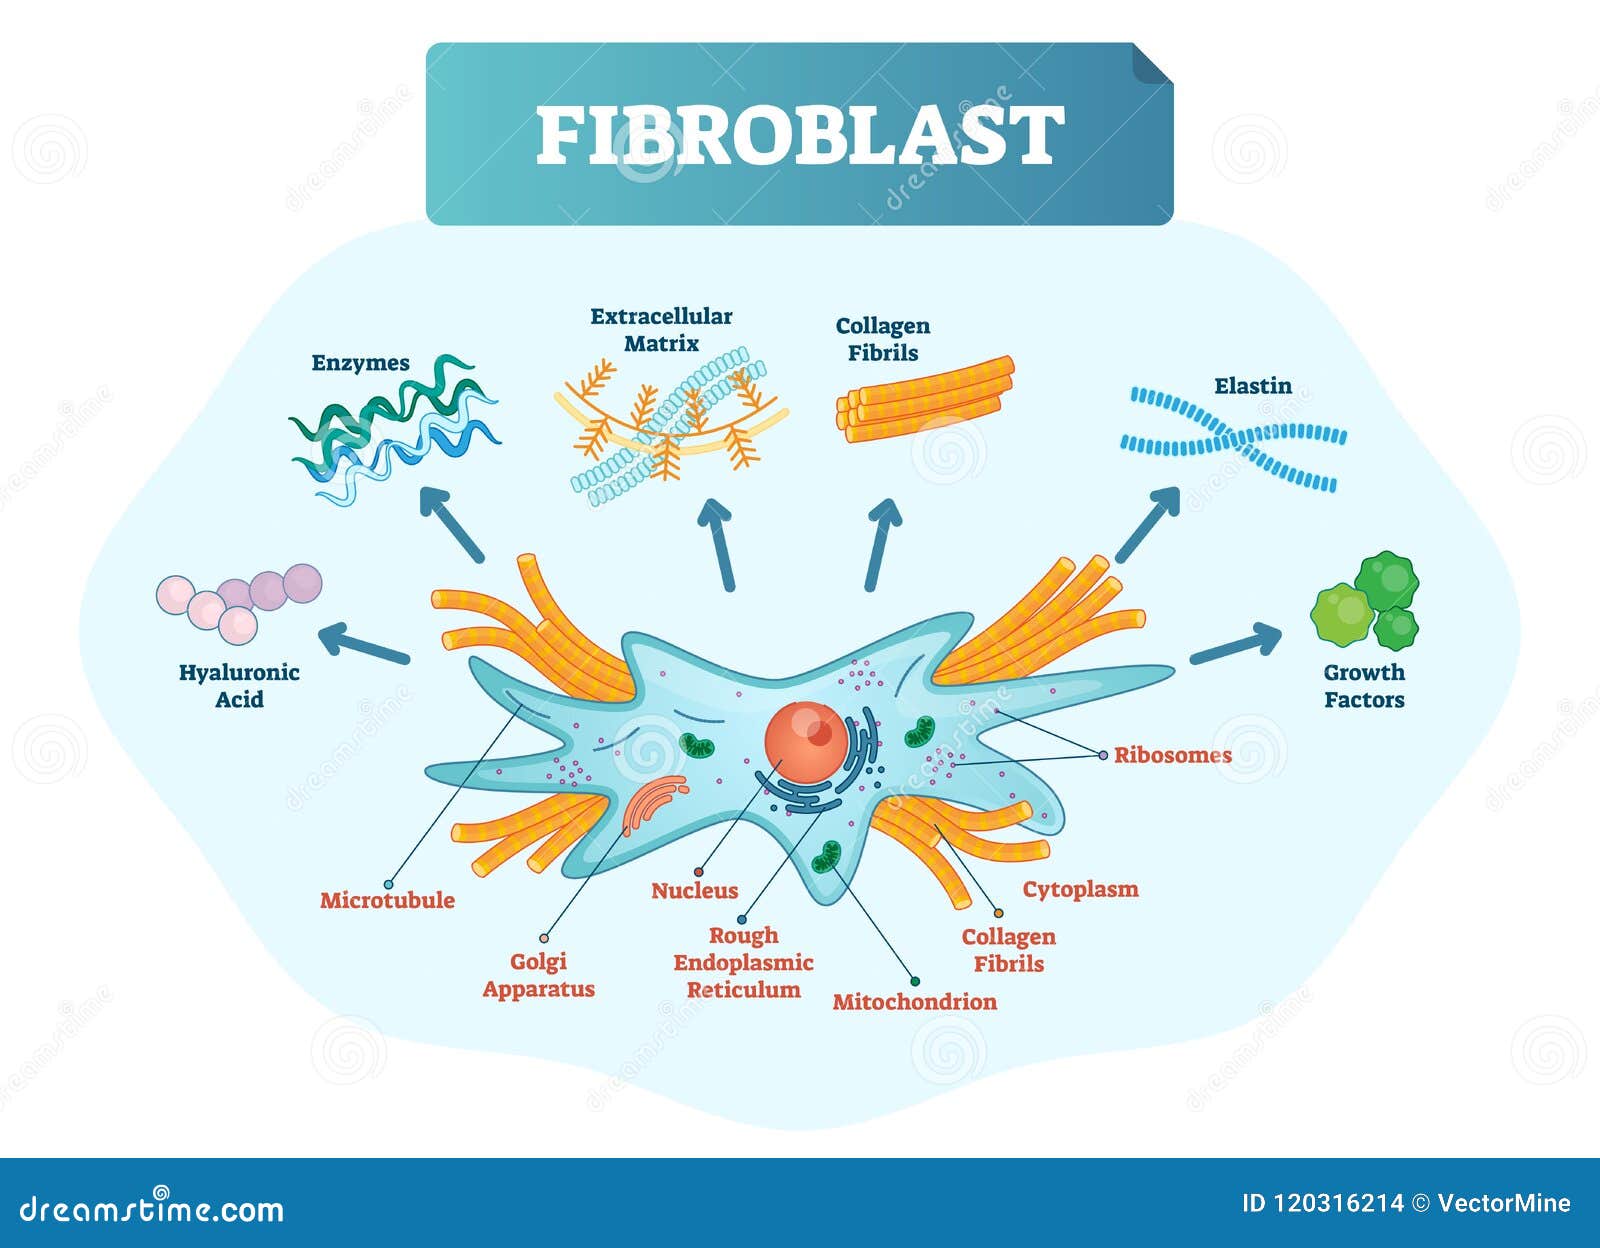 fibroblast  . scheme with extracellular, elastin, hyaluronic acid, microtubule, golgi apparatus and ribosomes.